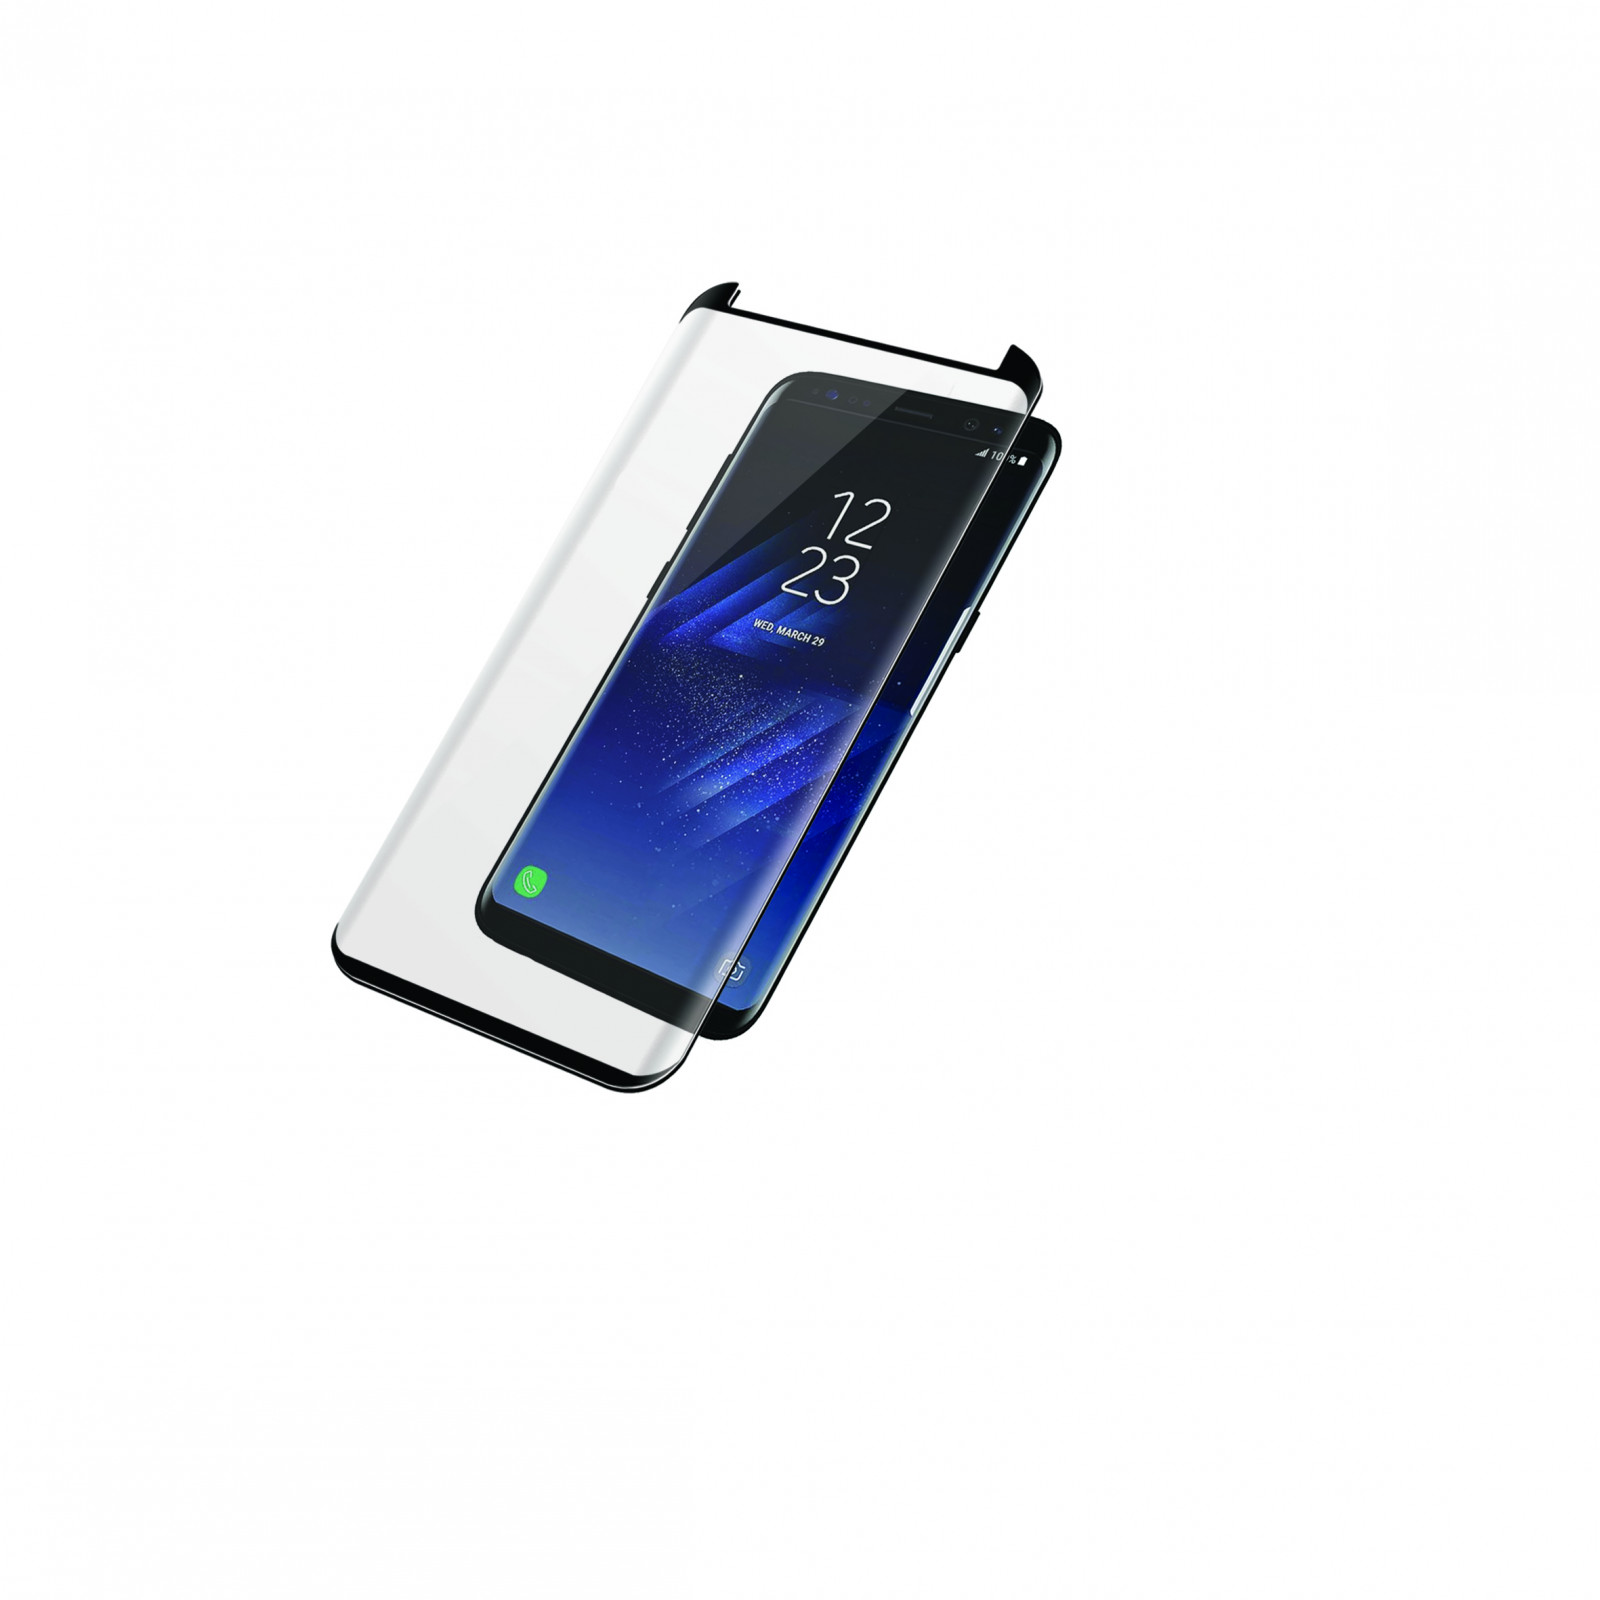 Стъклен протектор PanzerGlass за Samsung Galaxy S8 Plus CaseFriendly - Черно